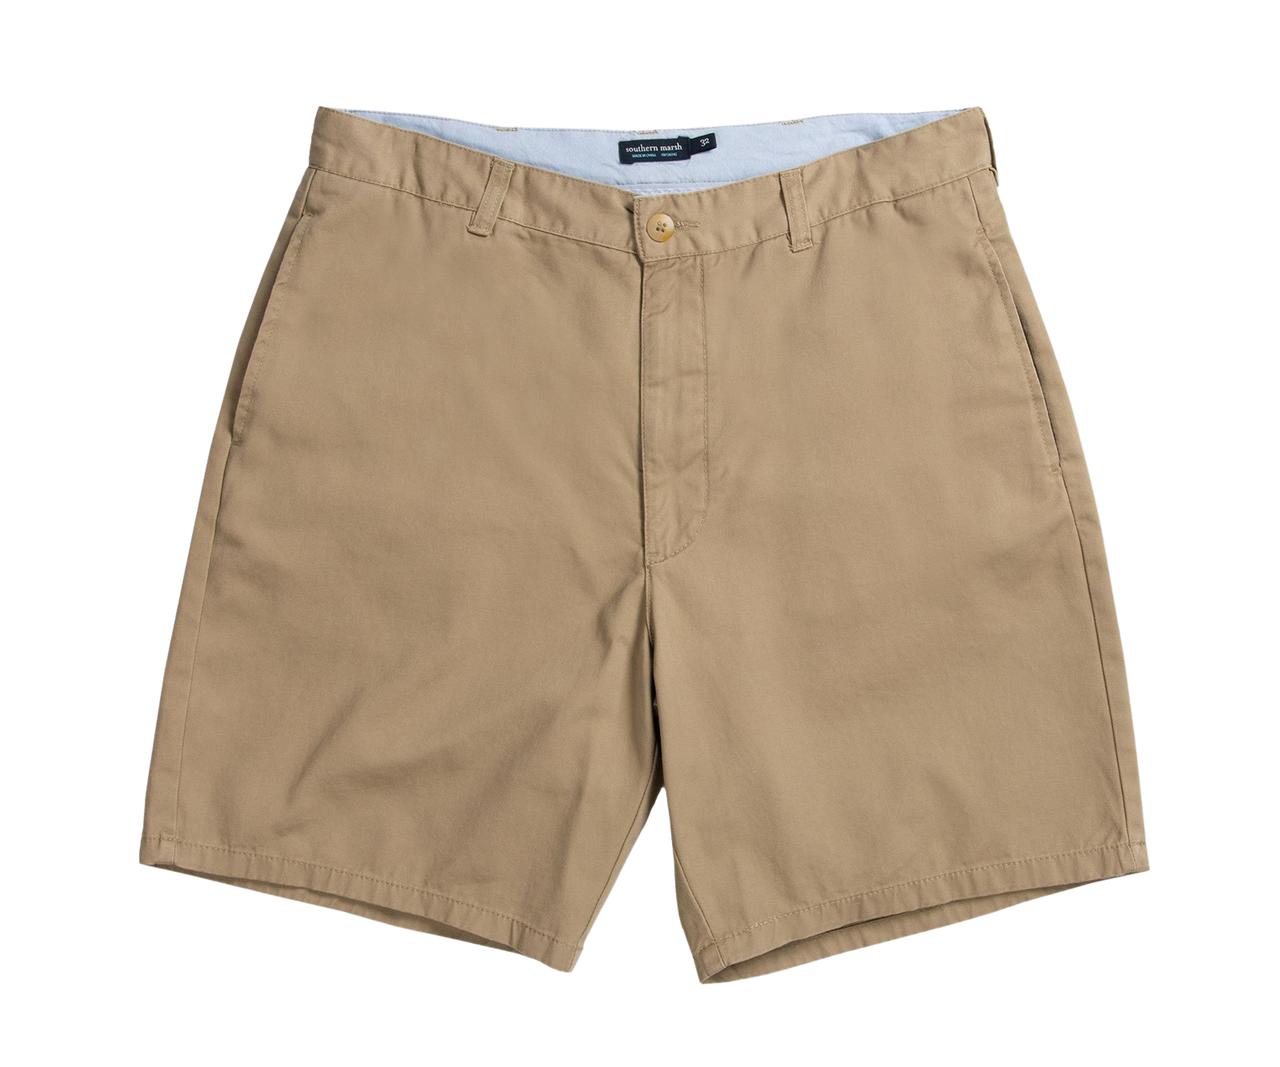 Southern Marsh Regatta Shorts